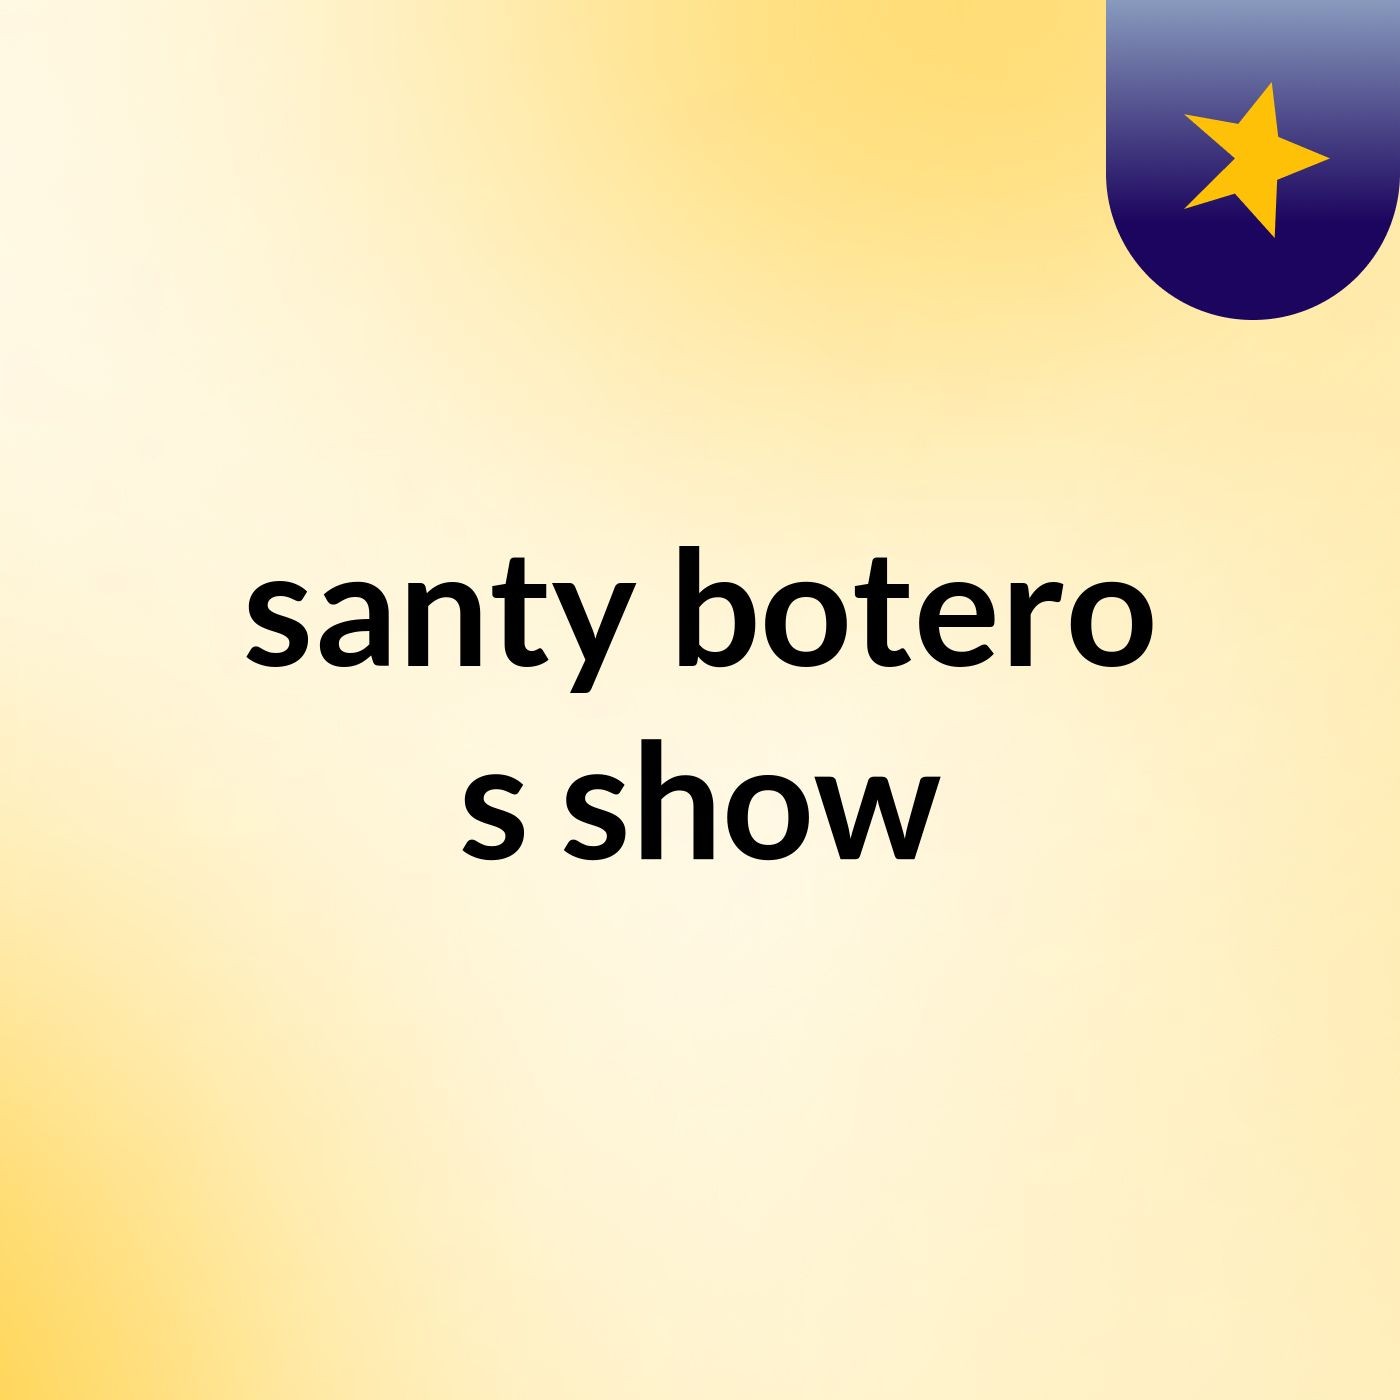 santy botero's show